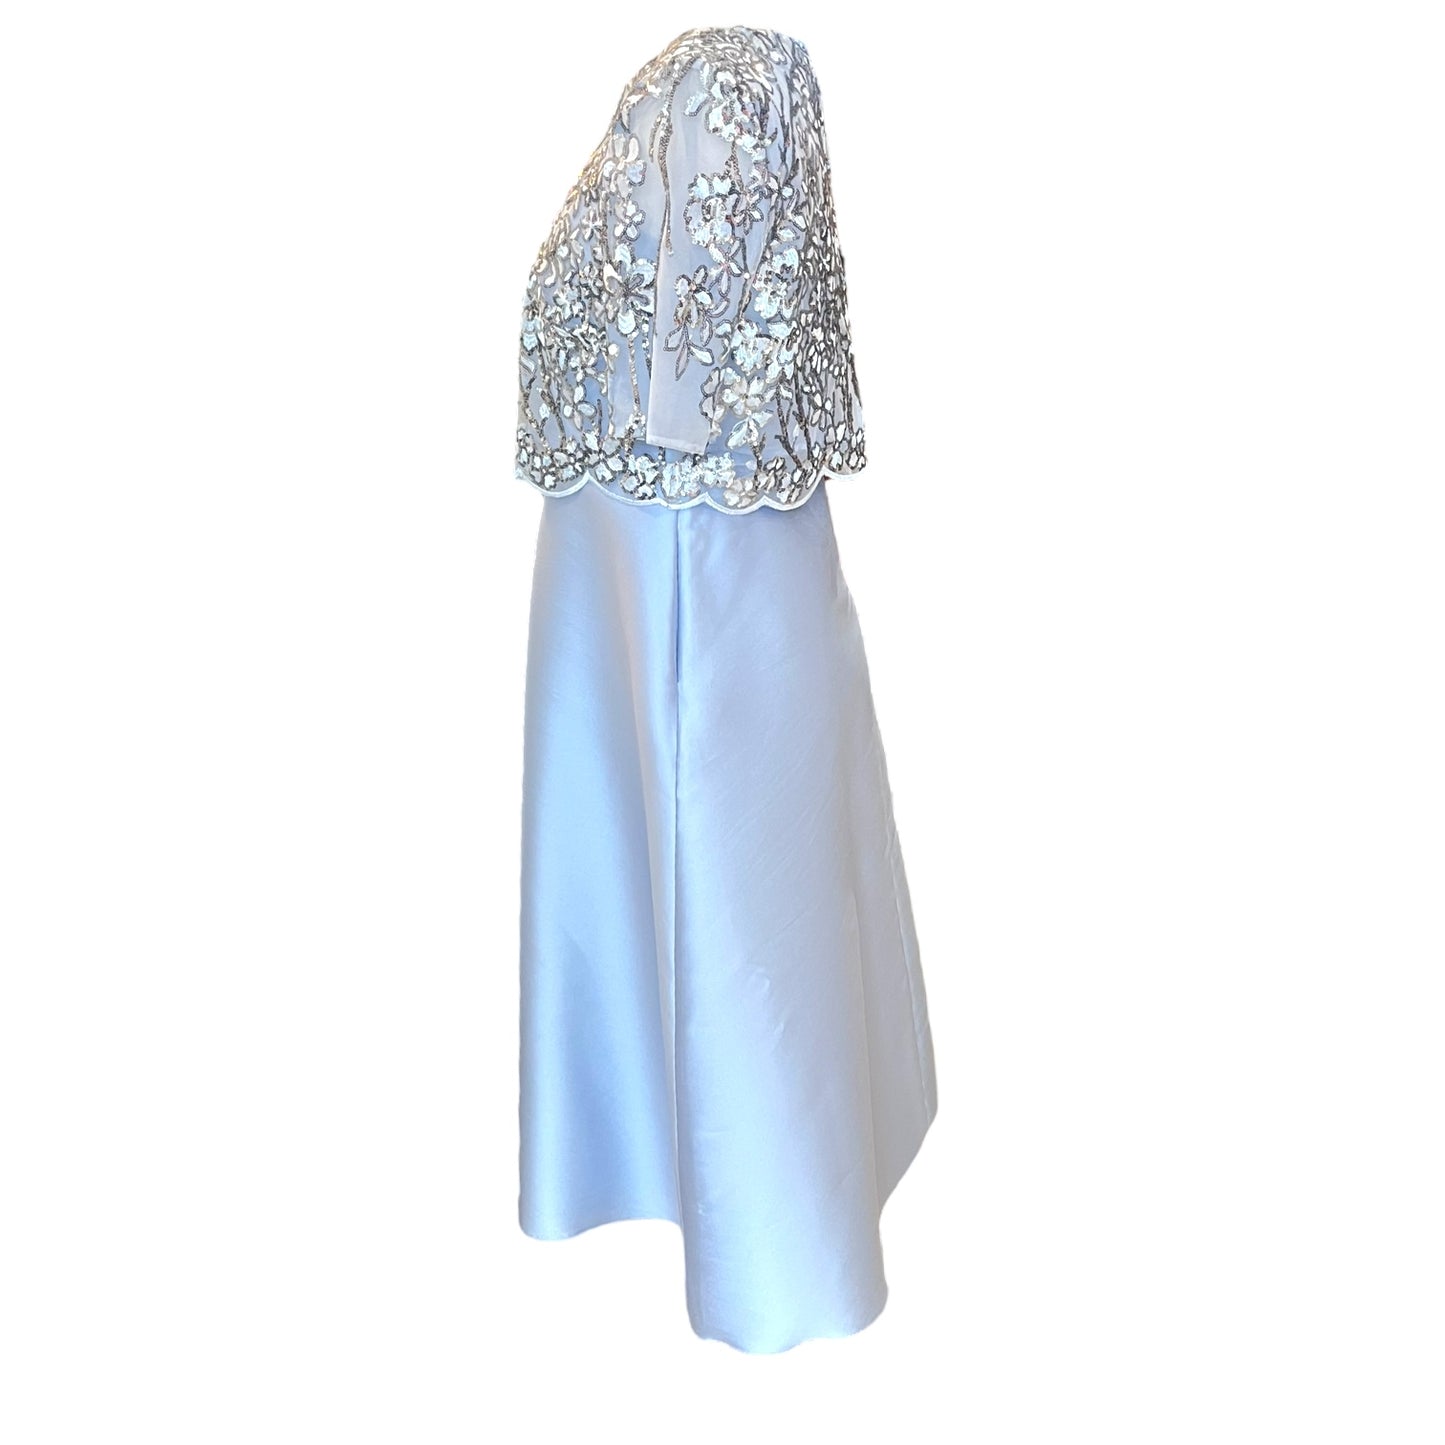 Gabriela Blue Dress and Embellished Cape - 10